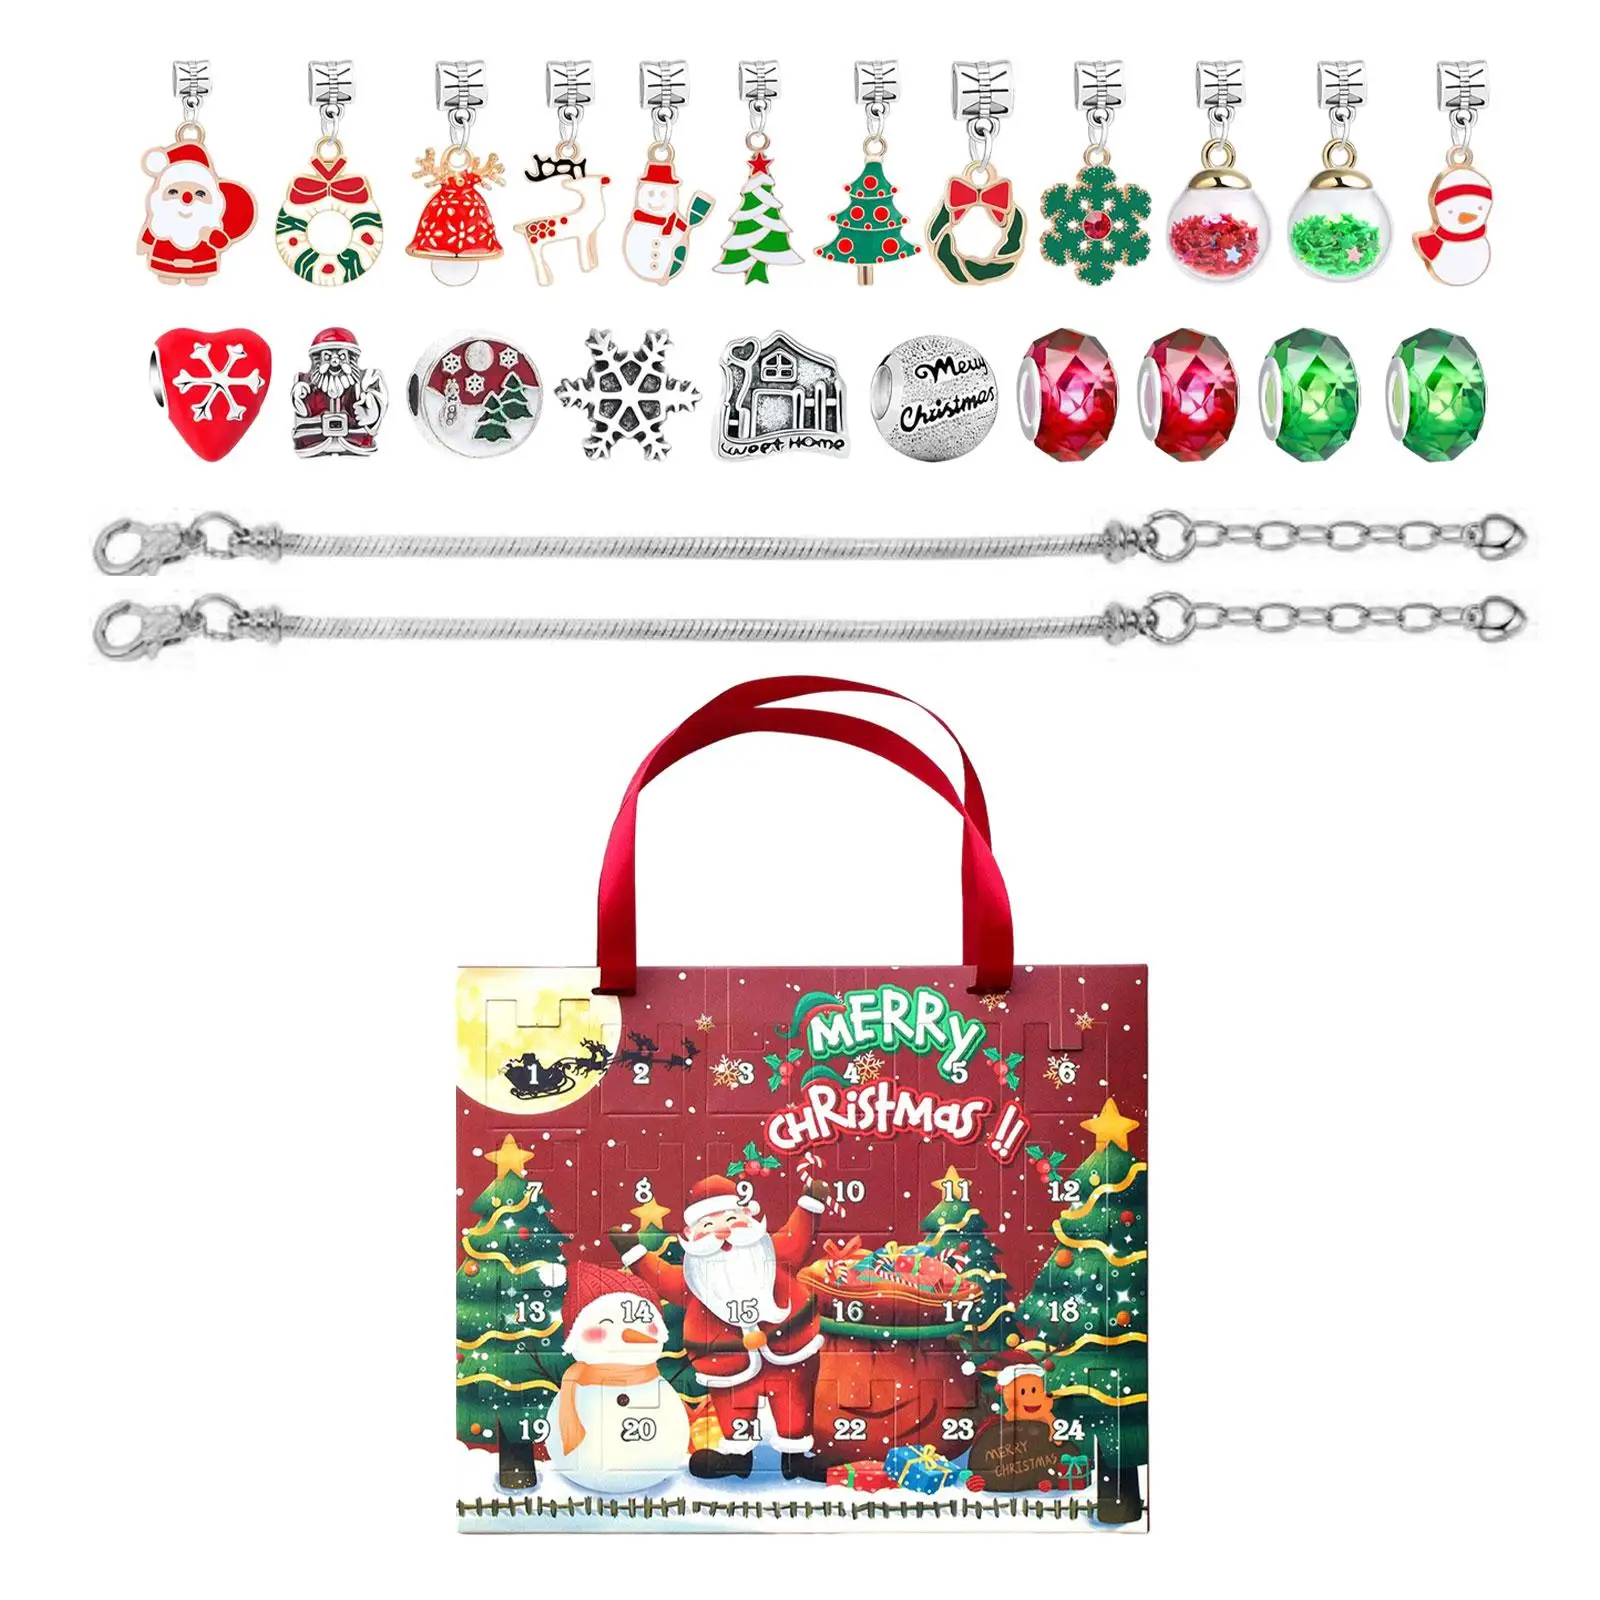 24 Grid Calendar Christmas DIY Bracelet Box Jewelry Making Decorative Decor Charm Bracelet Making Kit Kids Bangle Party Gift